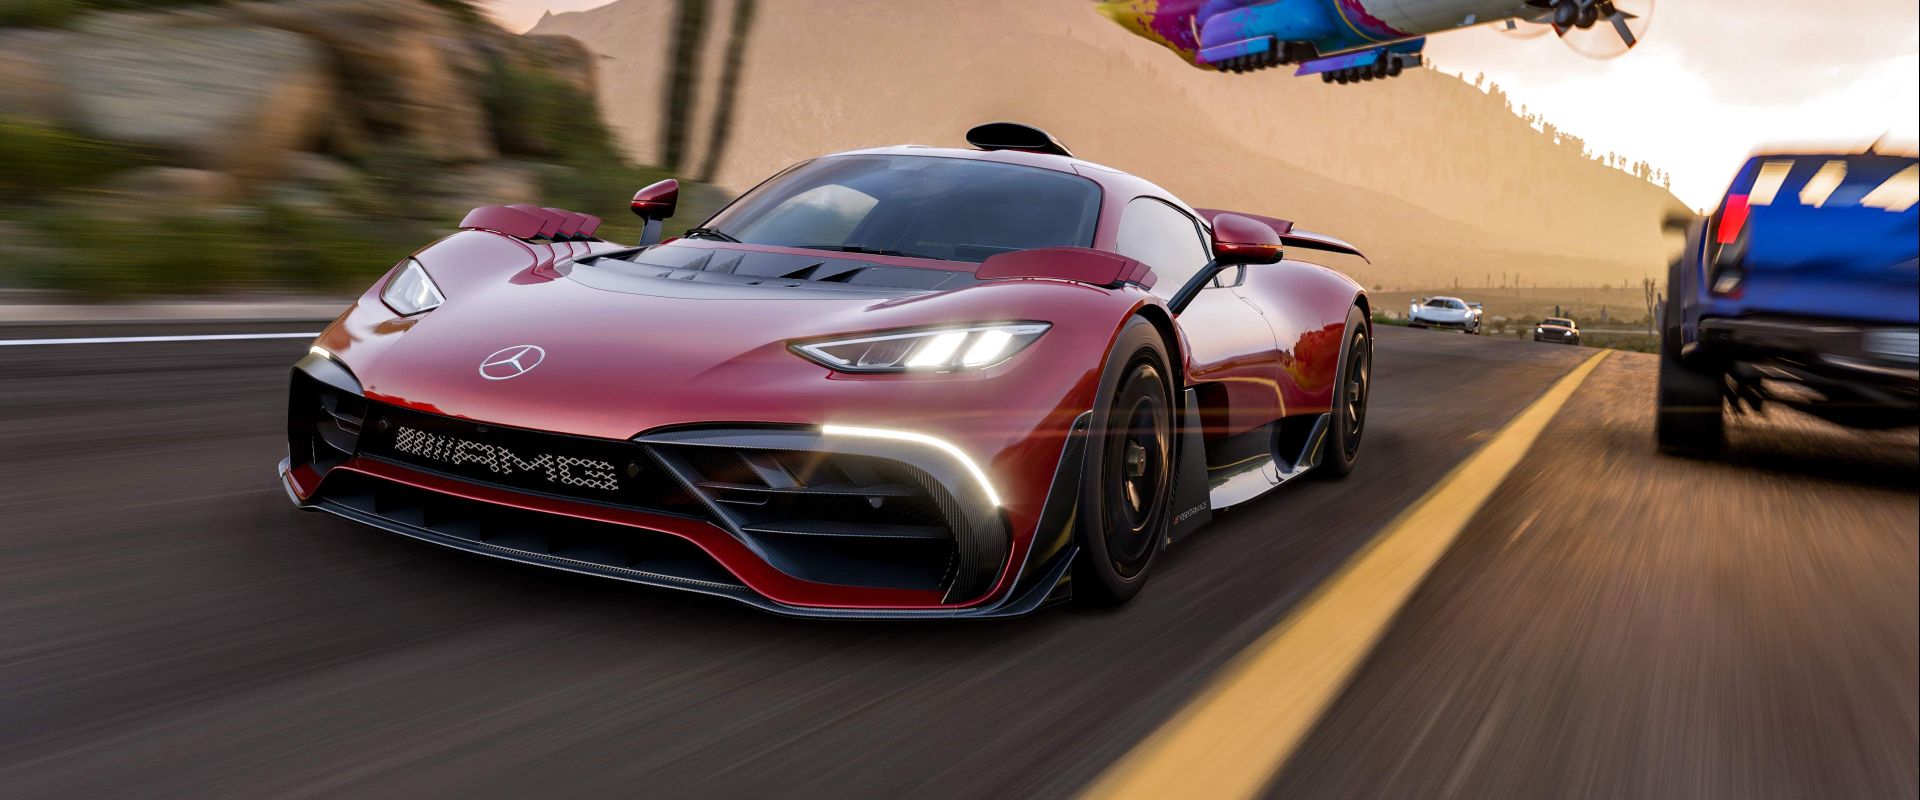 Forza Horizon 5 Hot Wheels Game Review4